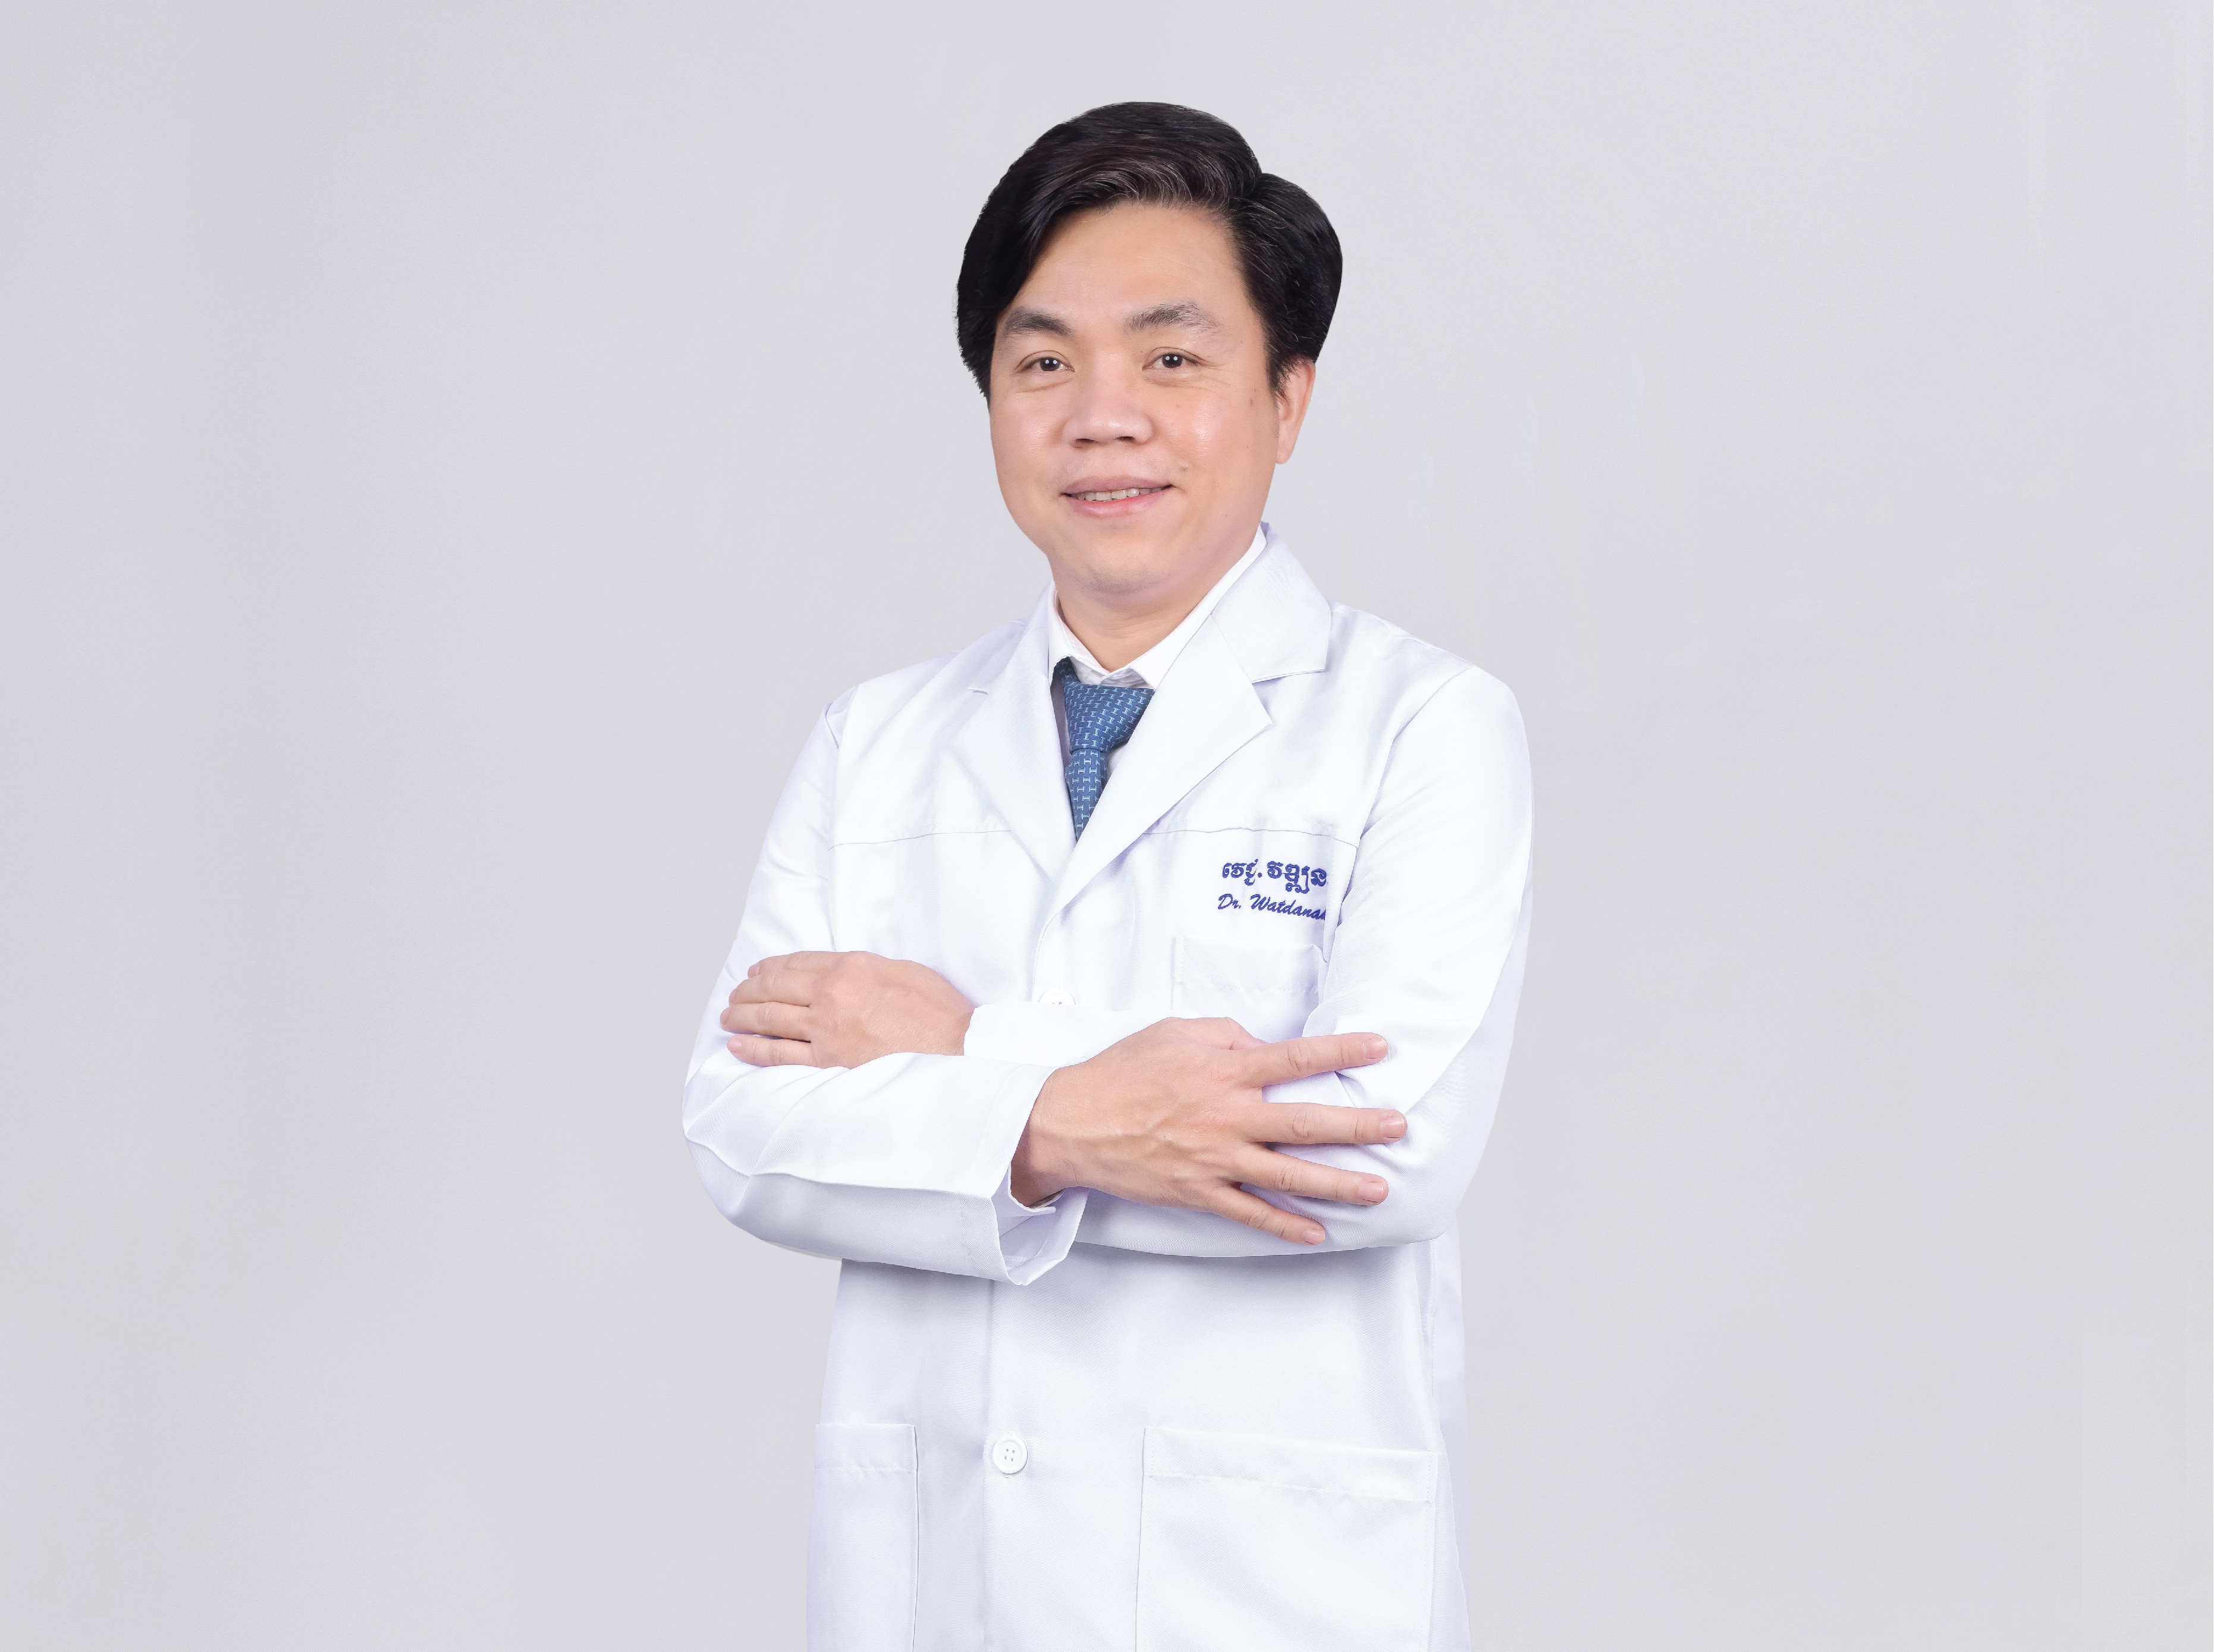 Dr. Watdanak Ky